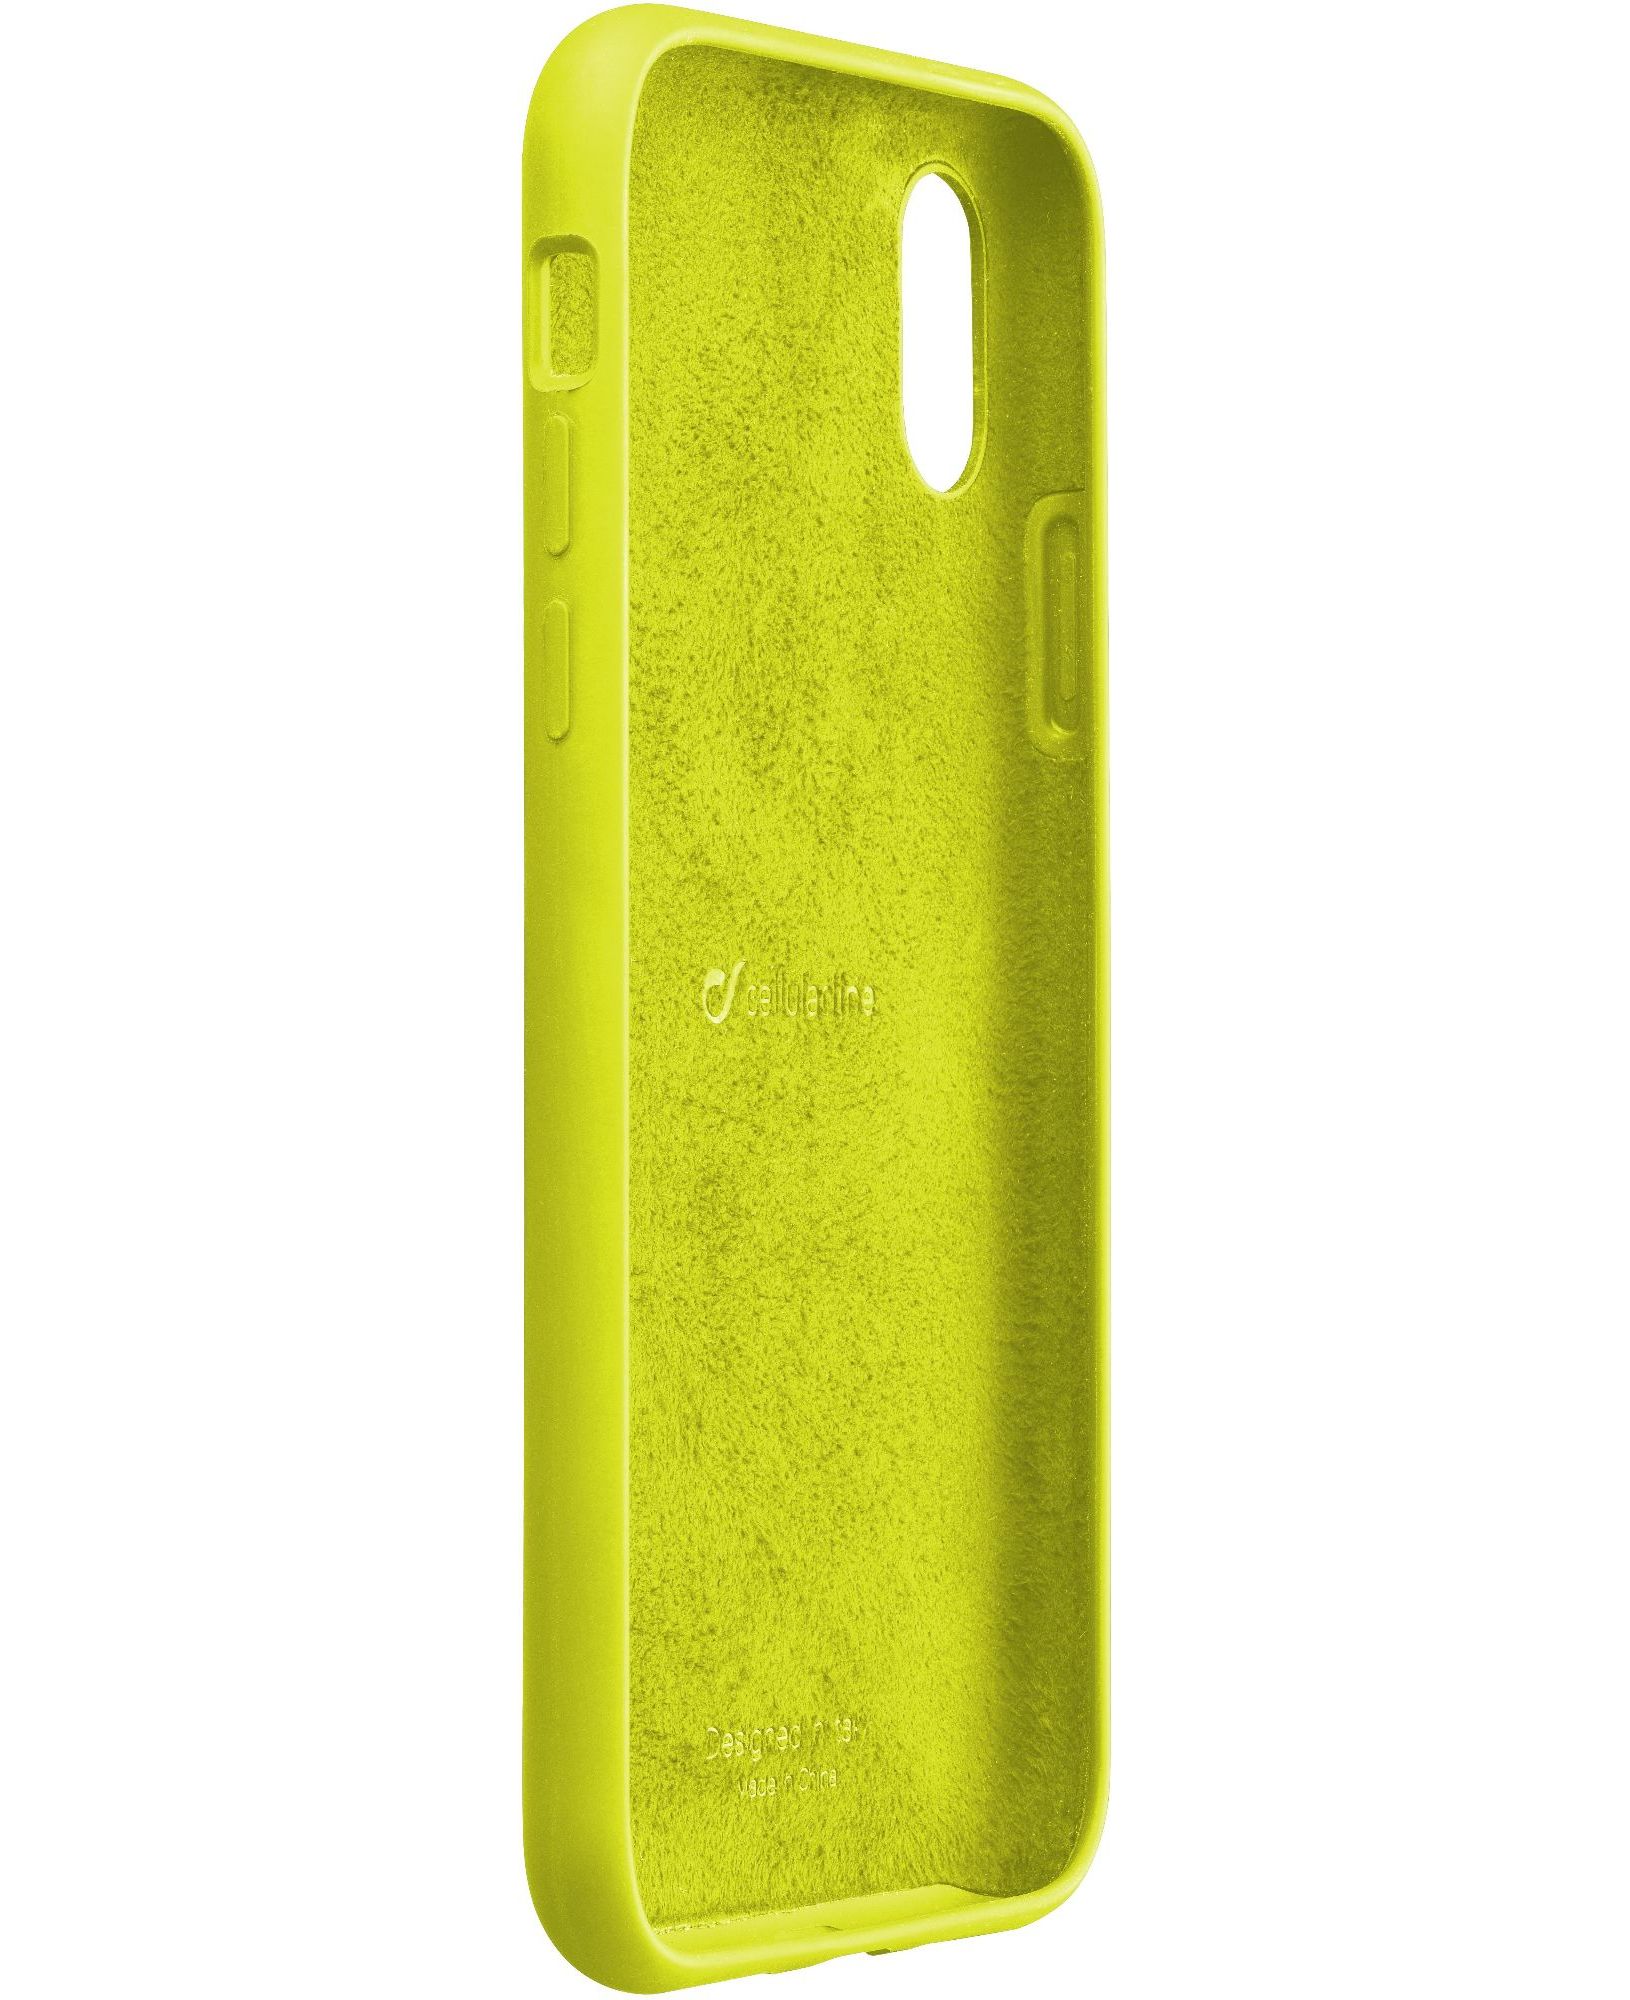 iPhone XS Max, case sensation, lime fluo